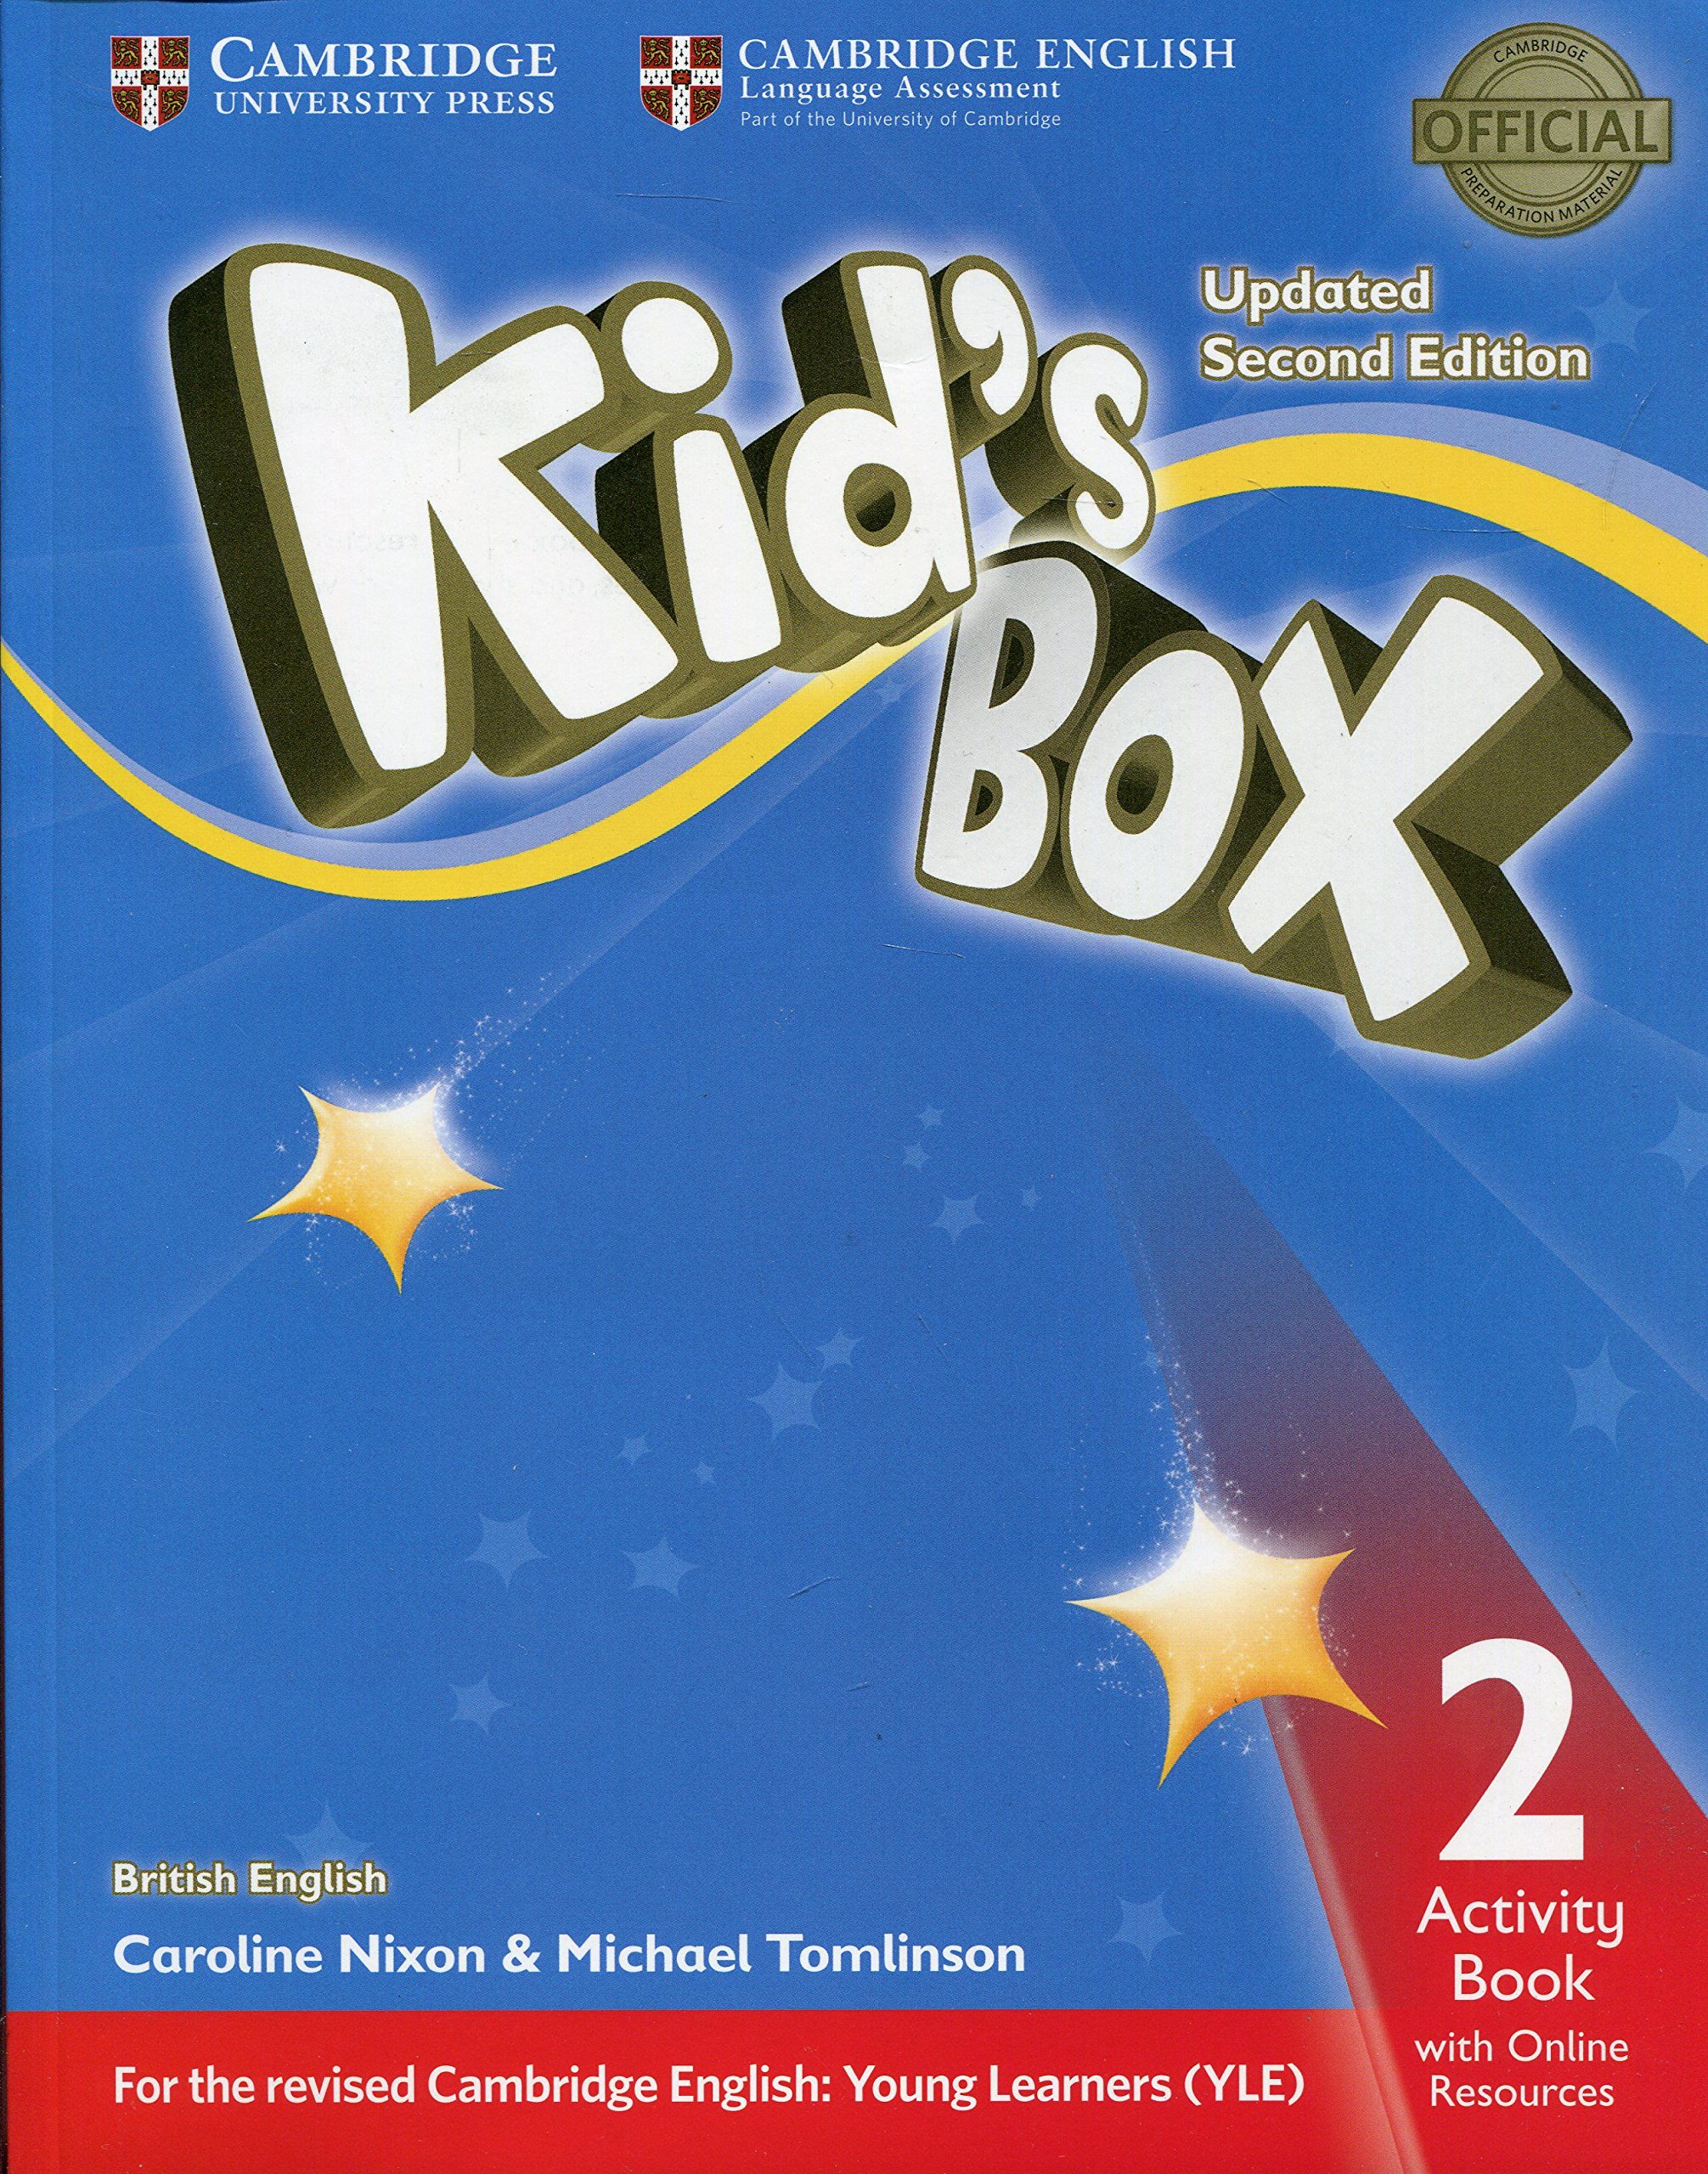 Kid's Box Level 2 Activity Book with Online Resources British English | Caroline Nixon, Michael Tomlinson